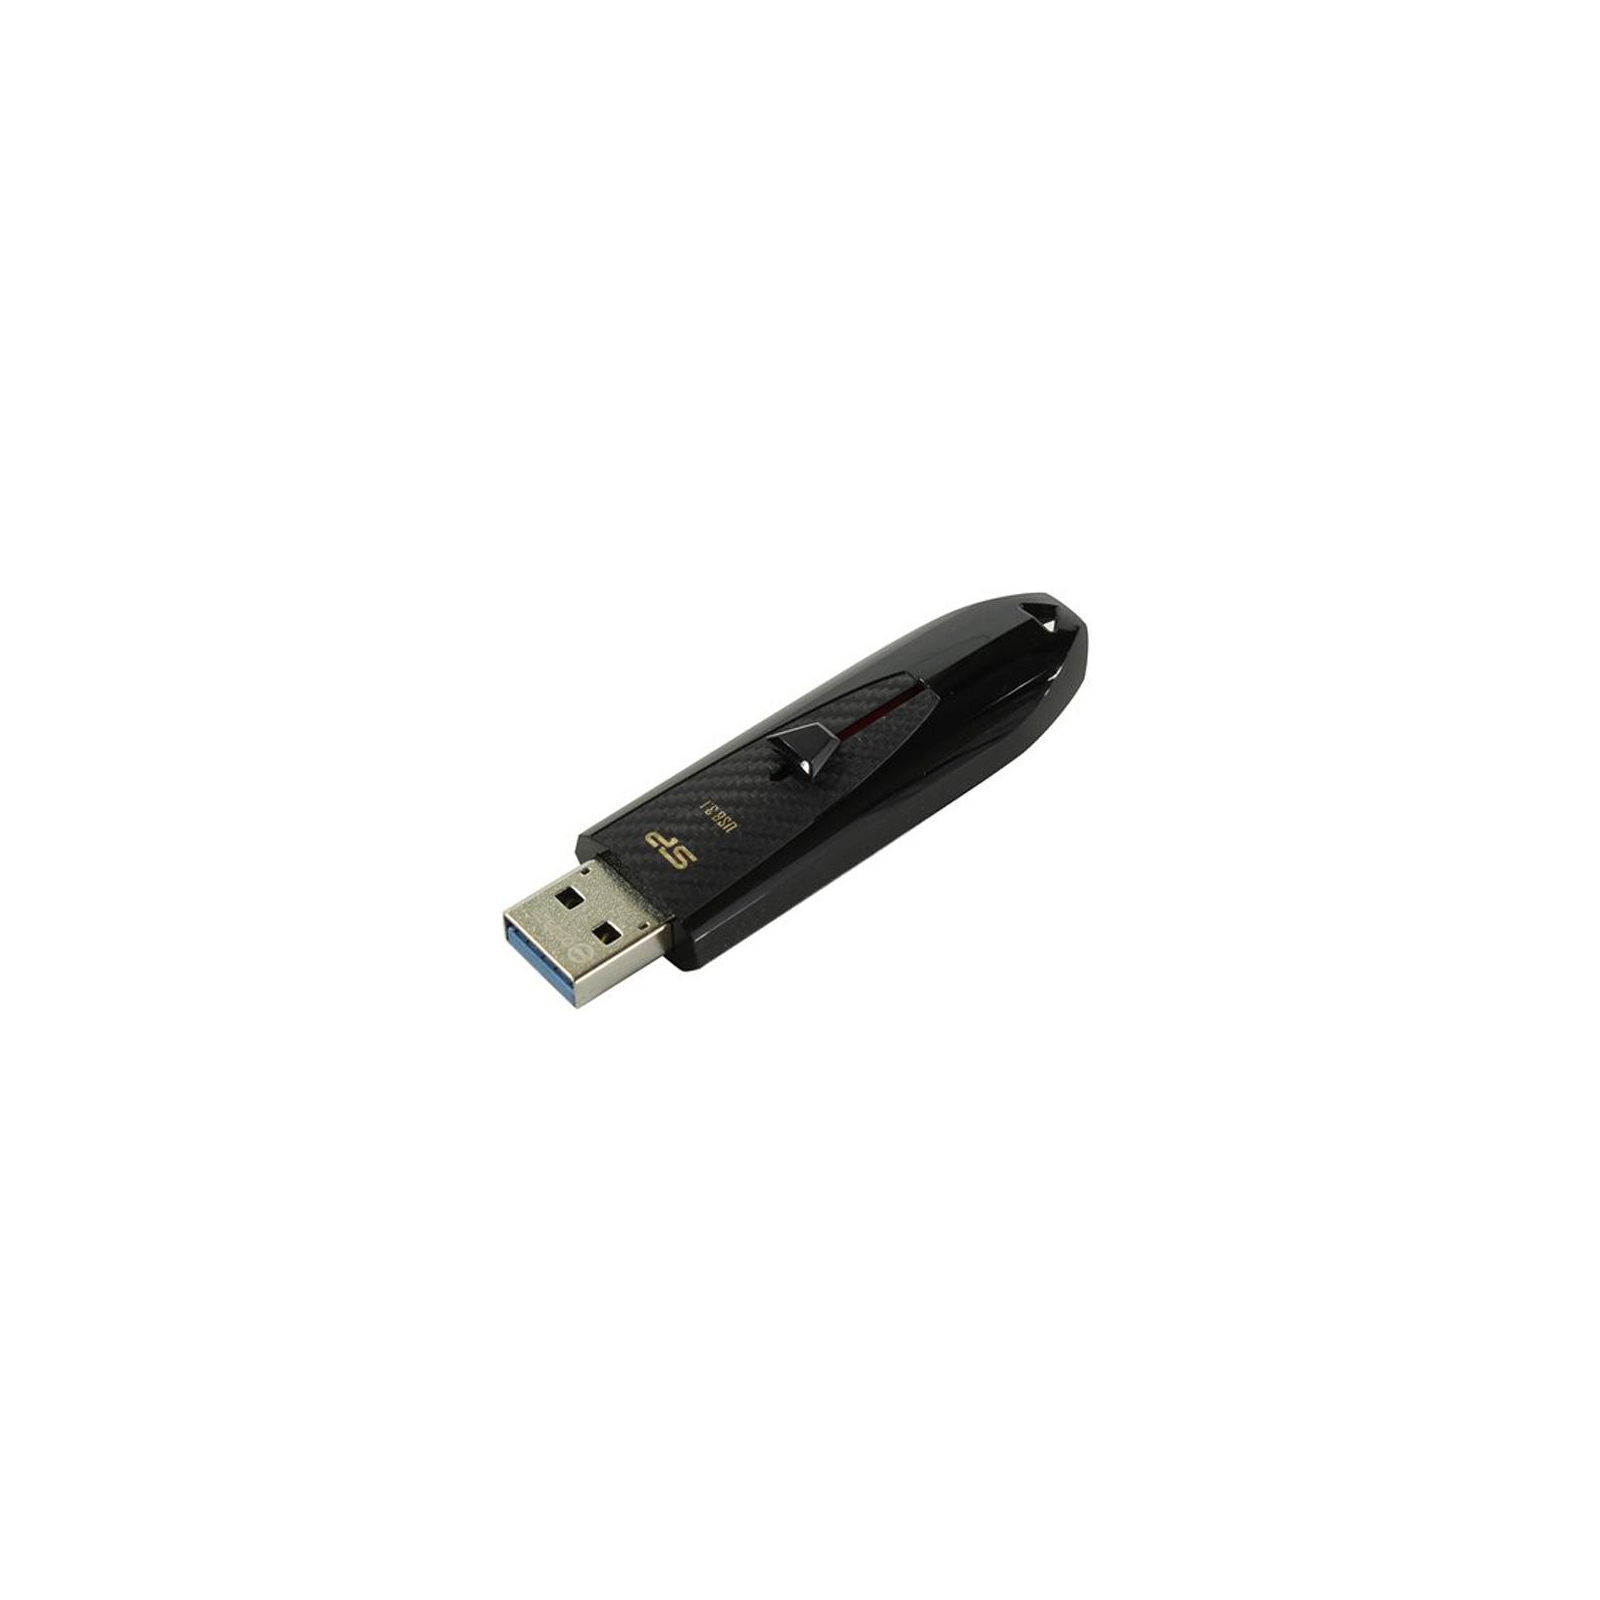 USB флеш накопитель Silicon Power 8GB B25 Black USB 3.0 (SP008GBUF3B25V1K) изображение 3